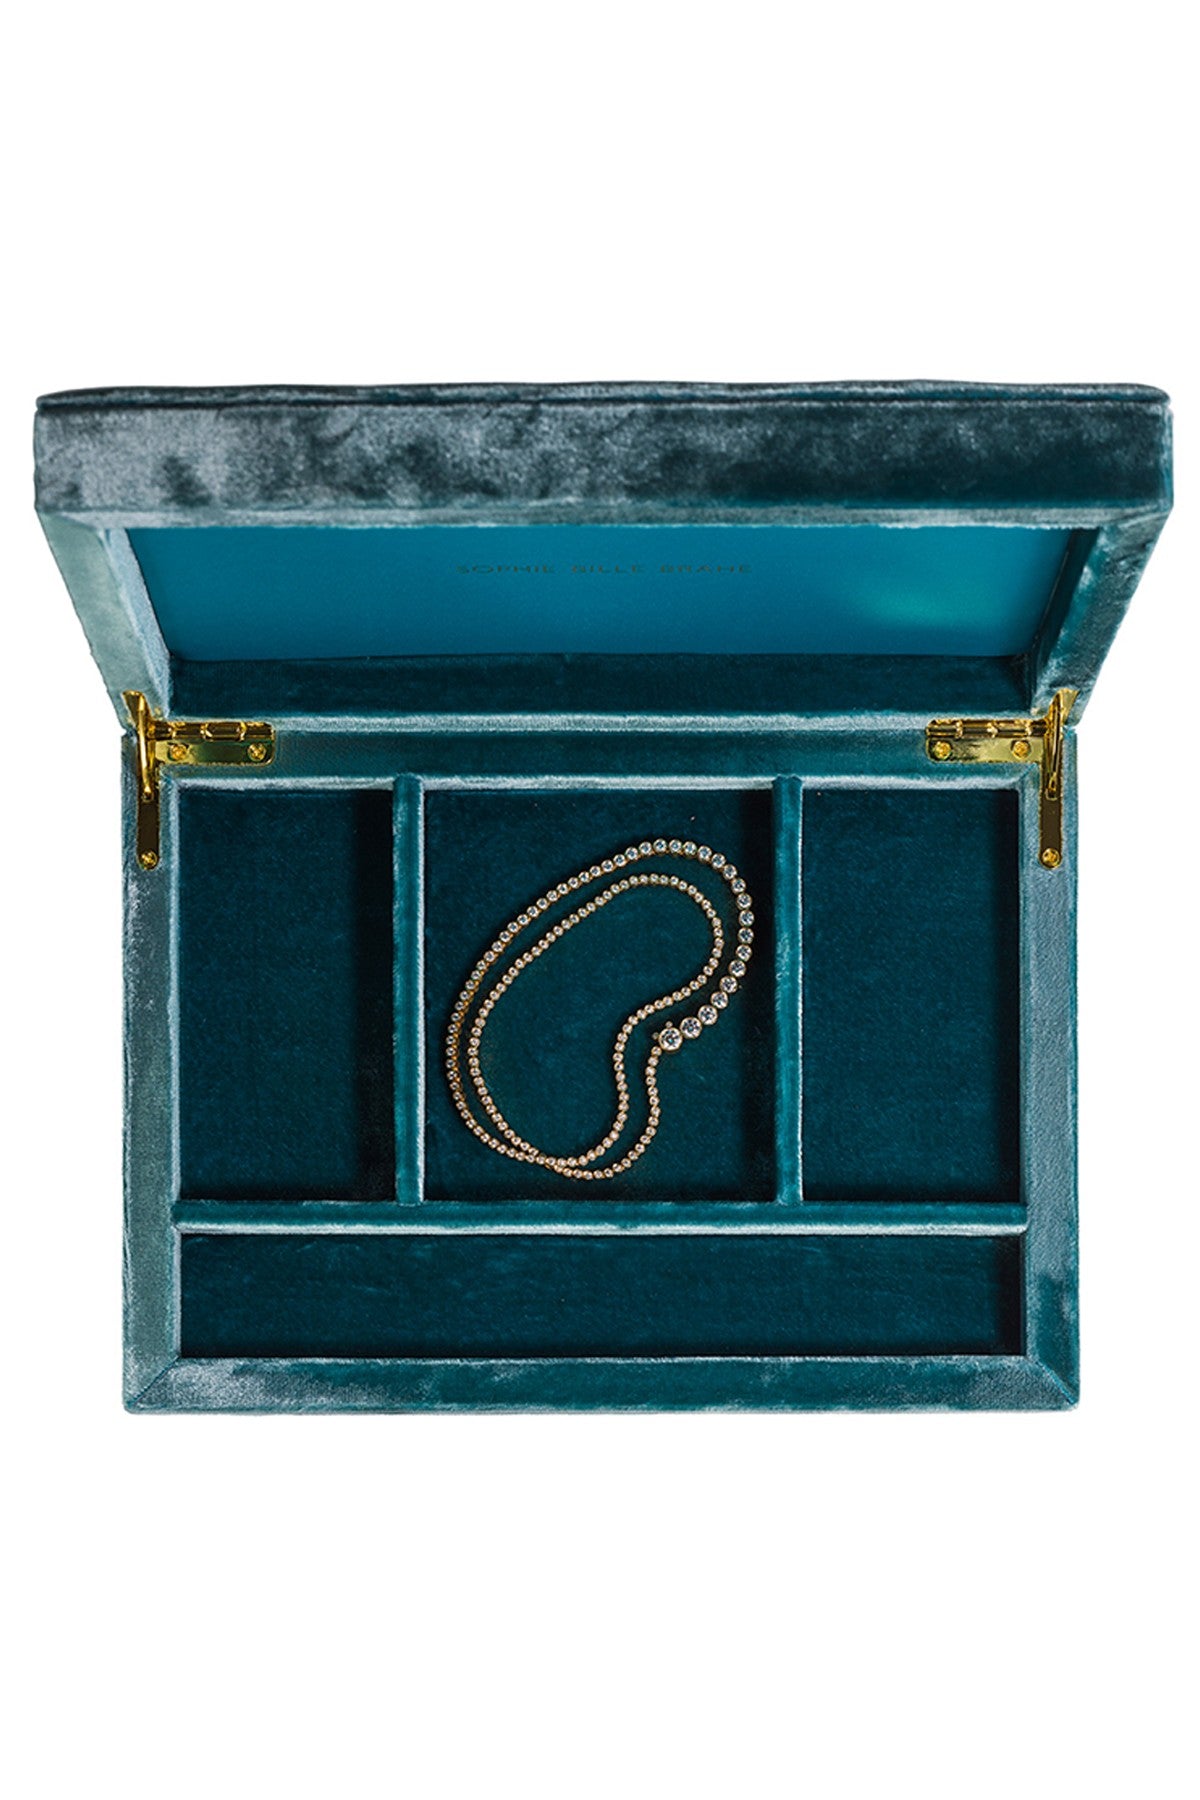 Jewelry Box - Tresor Green